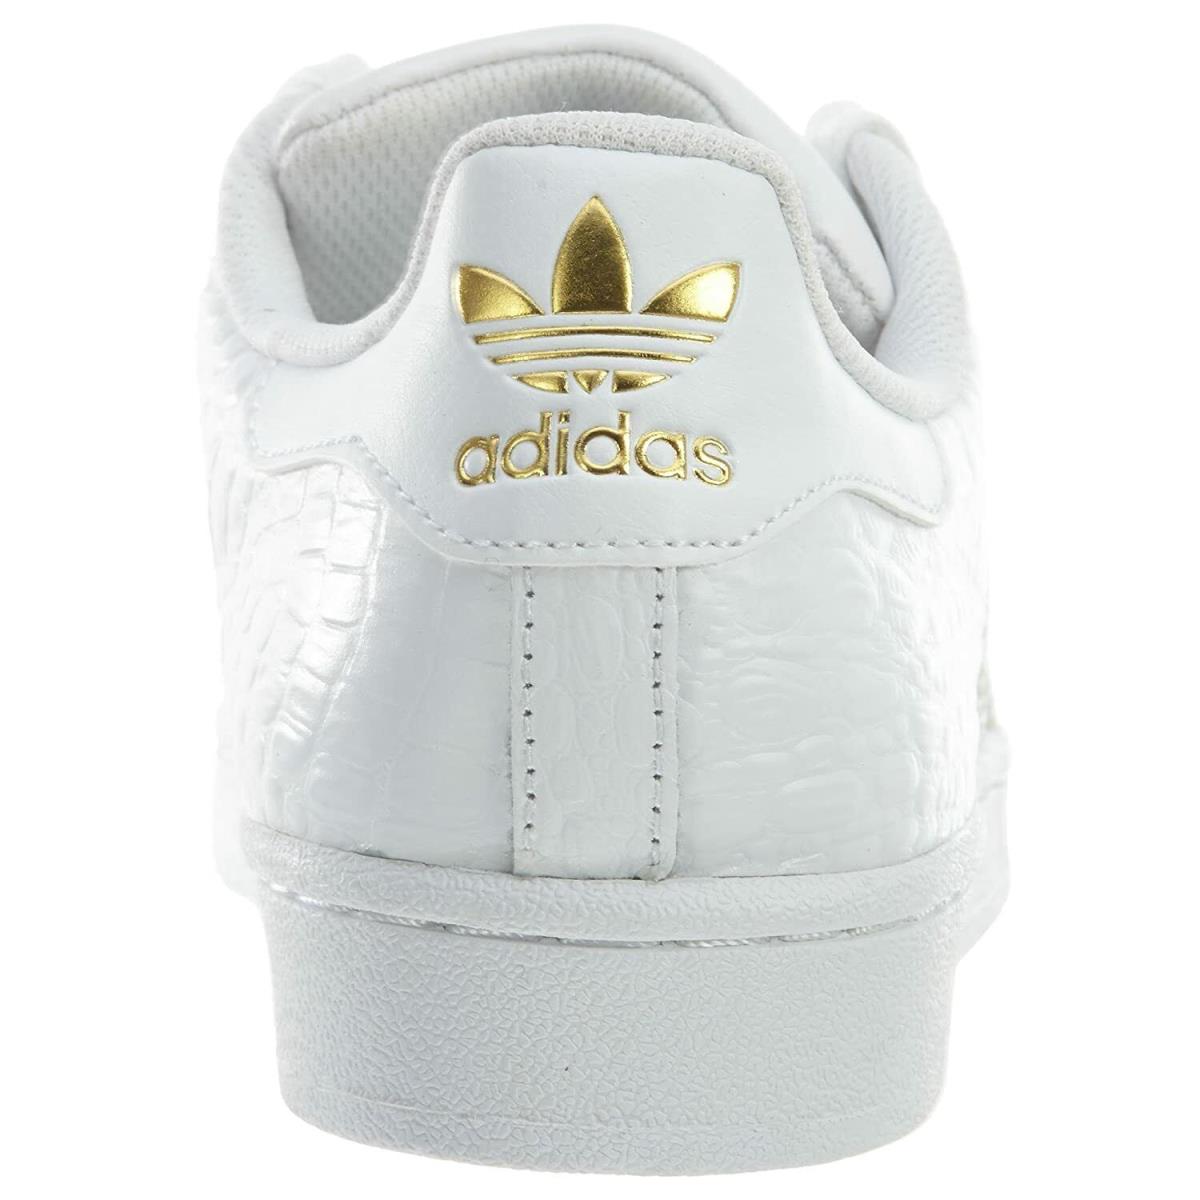 Adidas shoes Originals Superstar Croc - White 11